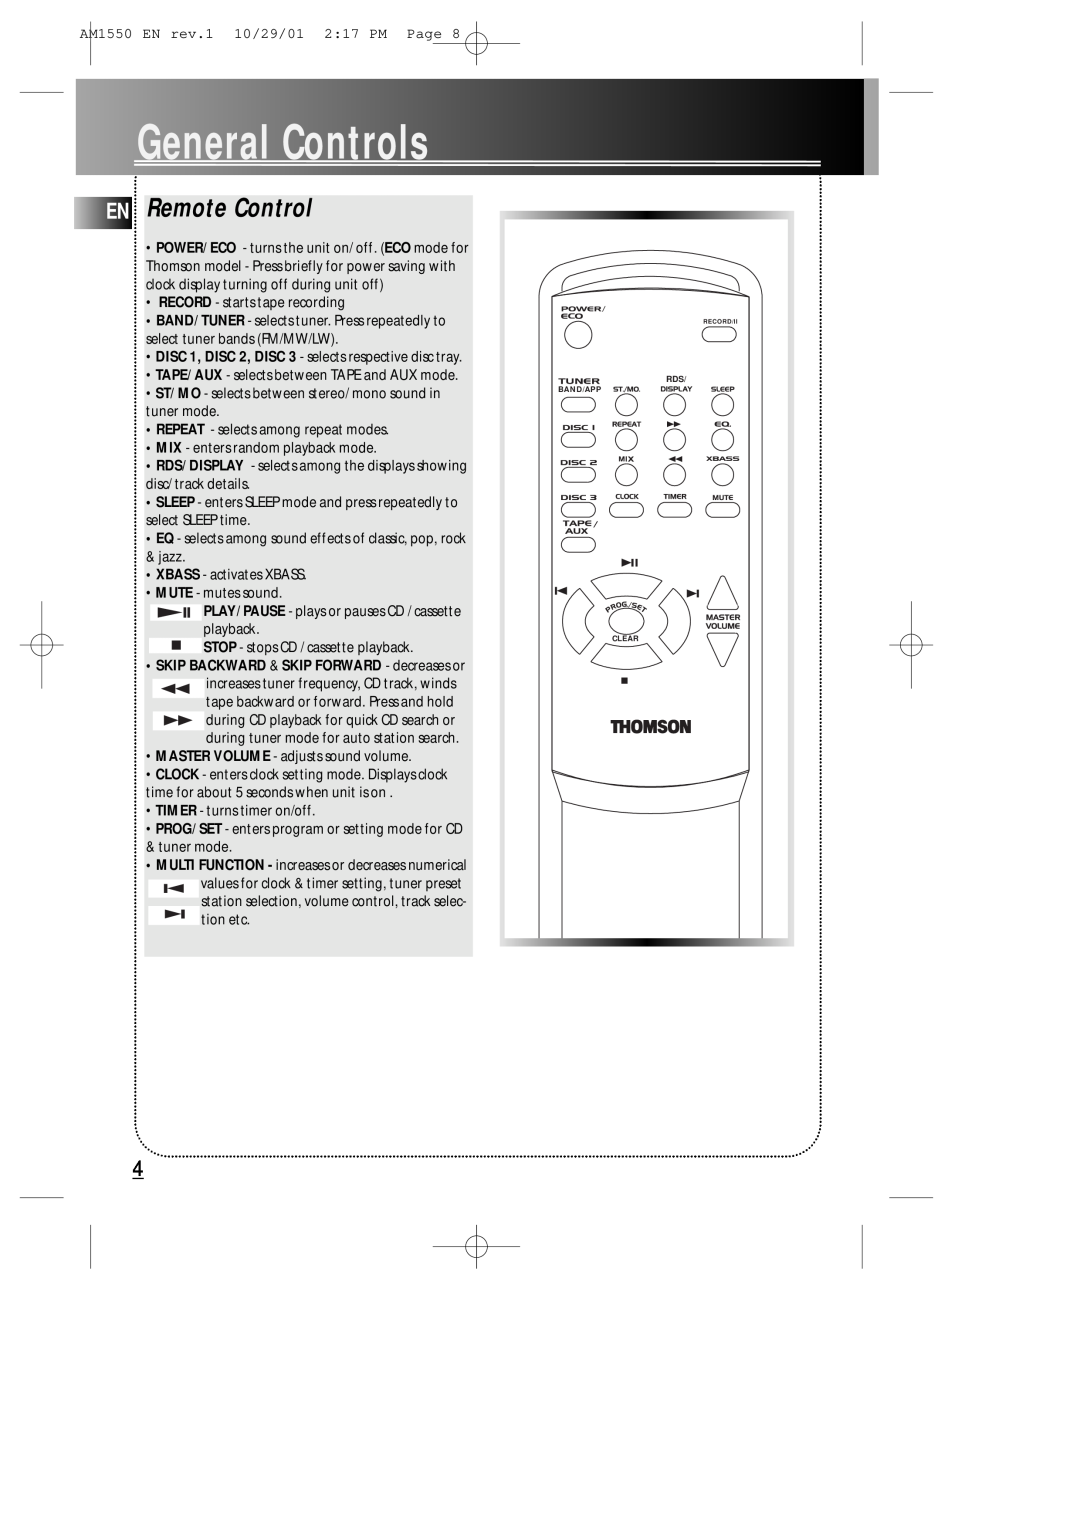 Technicolor - Thomson AM1550 manual ENRemote Control, GeneralControls 